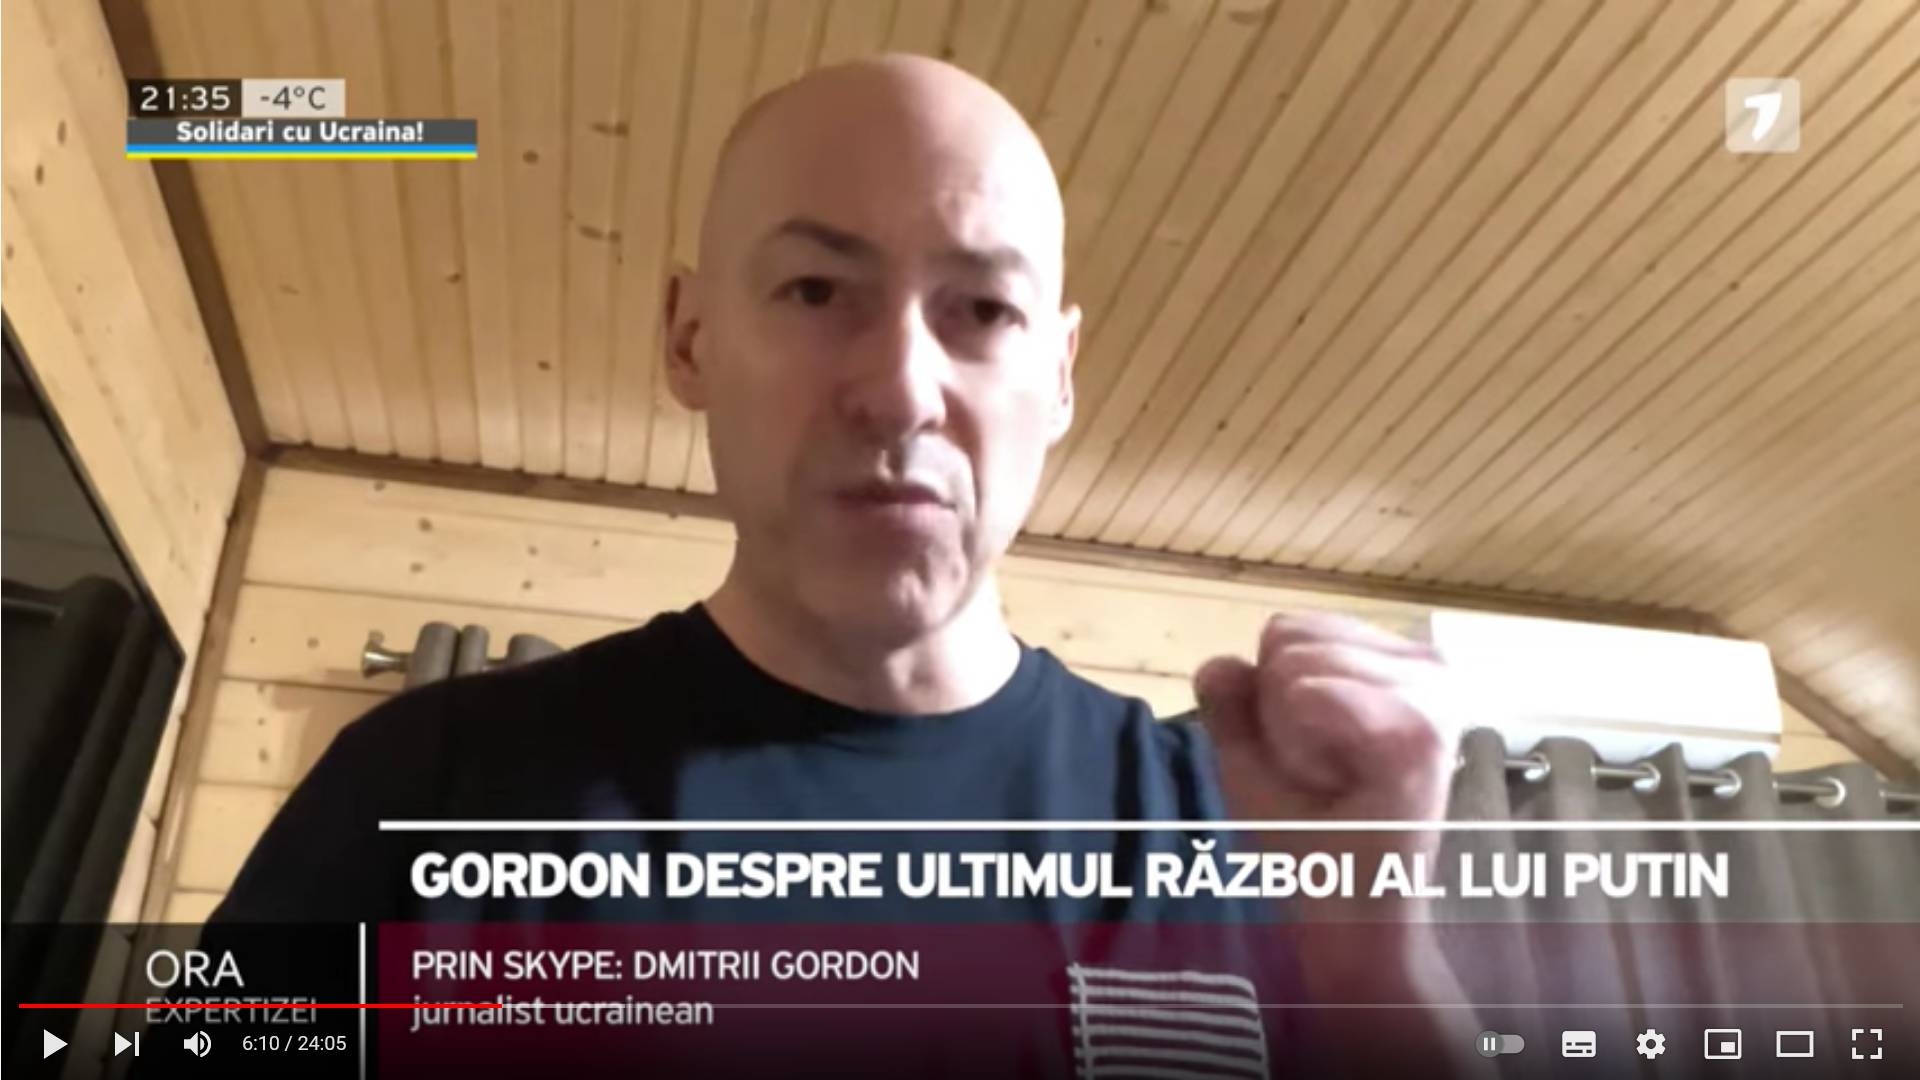 Цитата из интервью Дмитрия Гордона молдавскому телеканалу Jurnal TV 